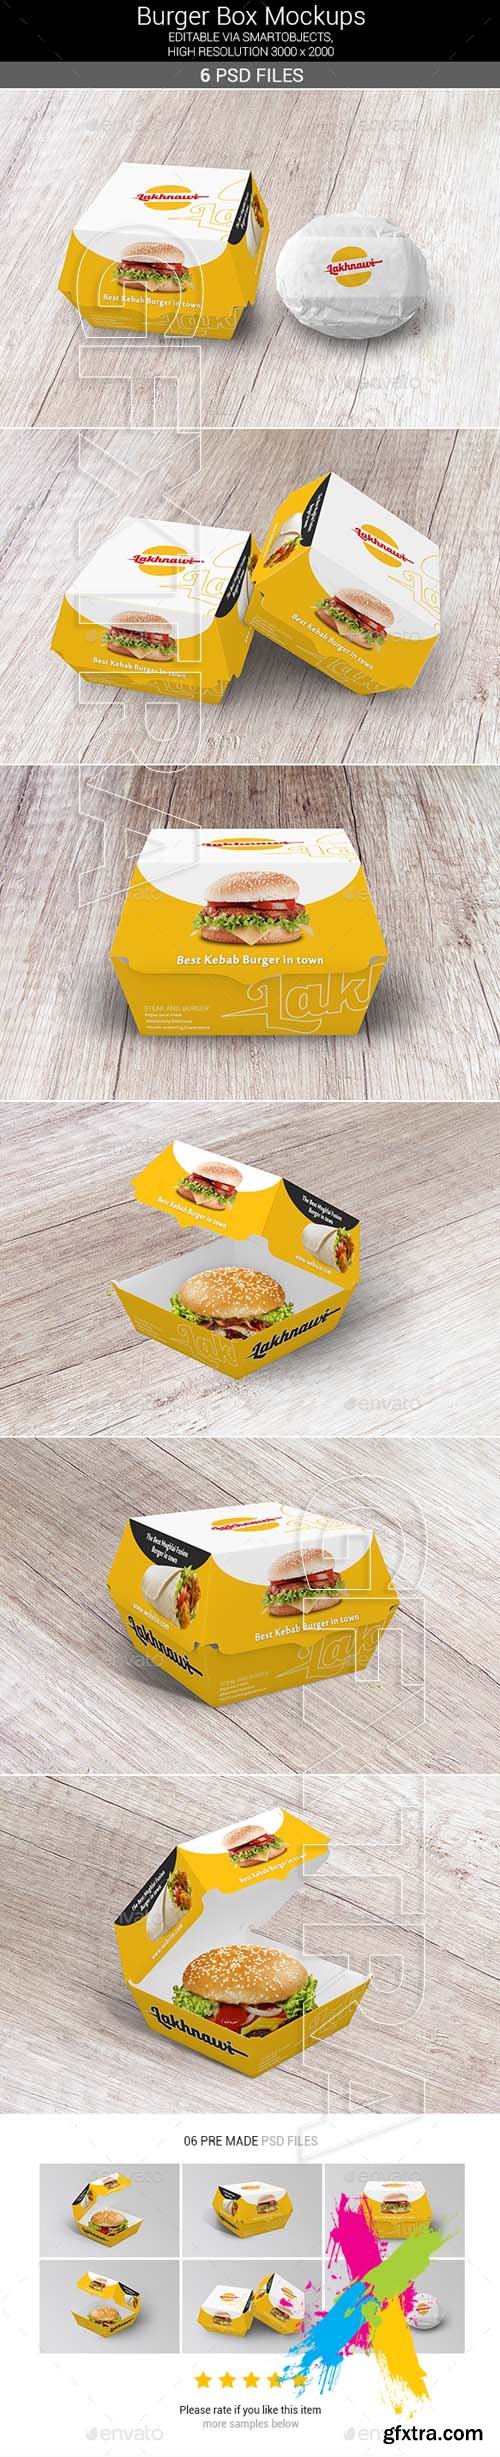 GR - Burger Box Mockups 19852419